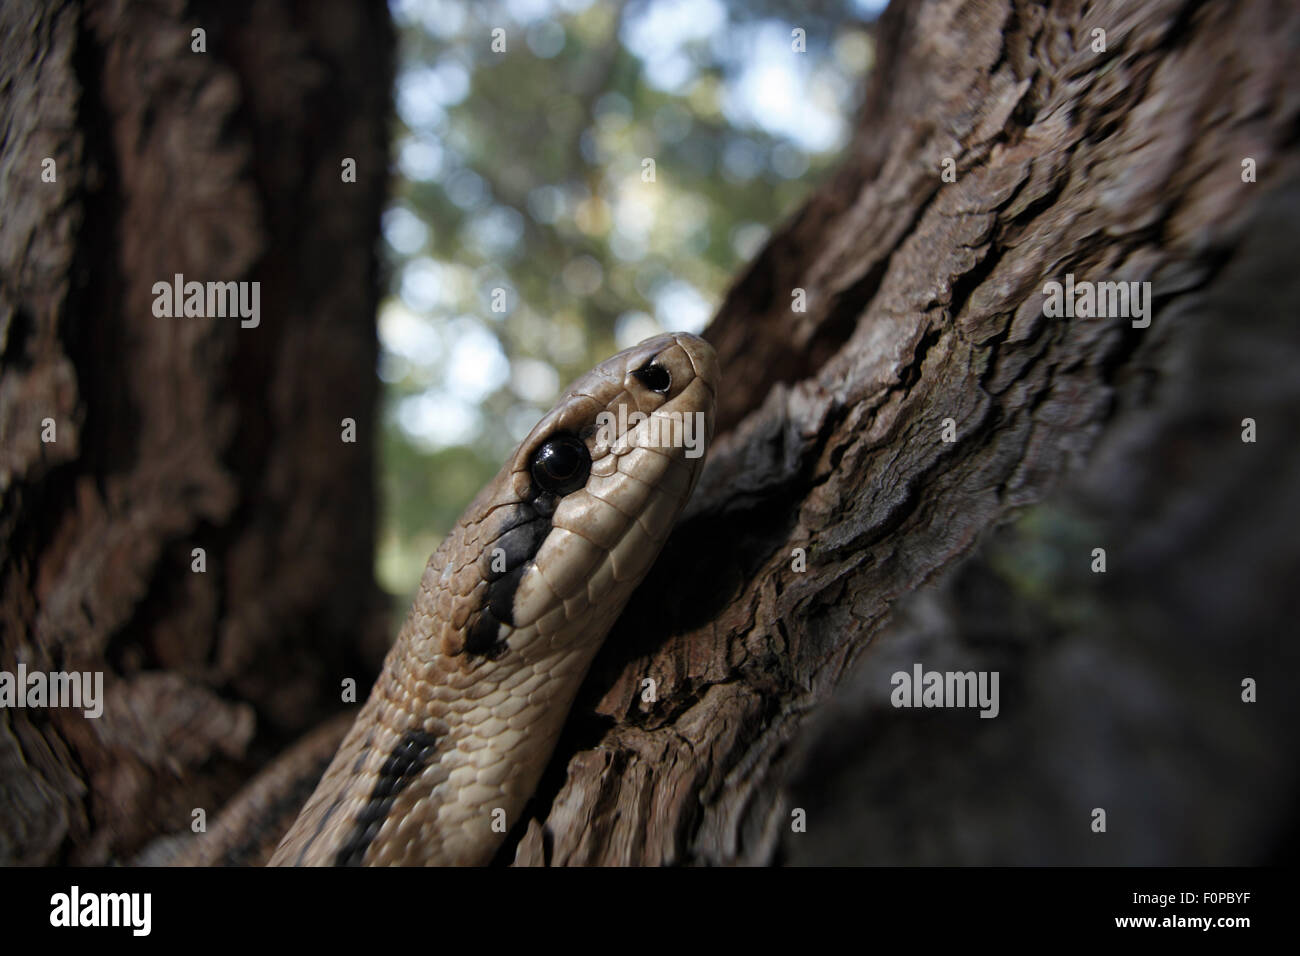 Four-lined snake (Elaphe quatuorlineata) climbing tree, Patras area, The Peloponnese, Greece, May 2009 Stock Photo